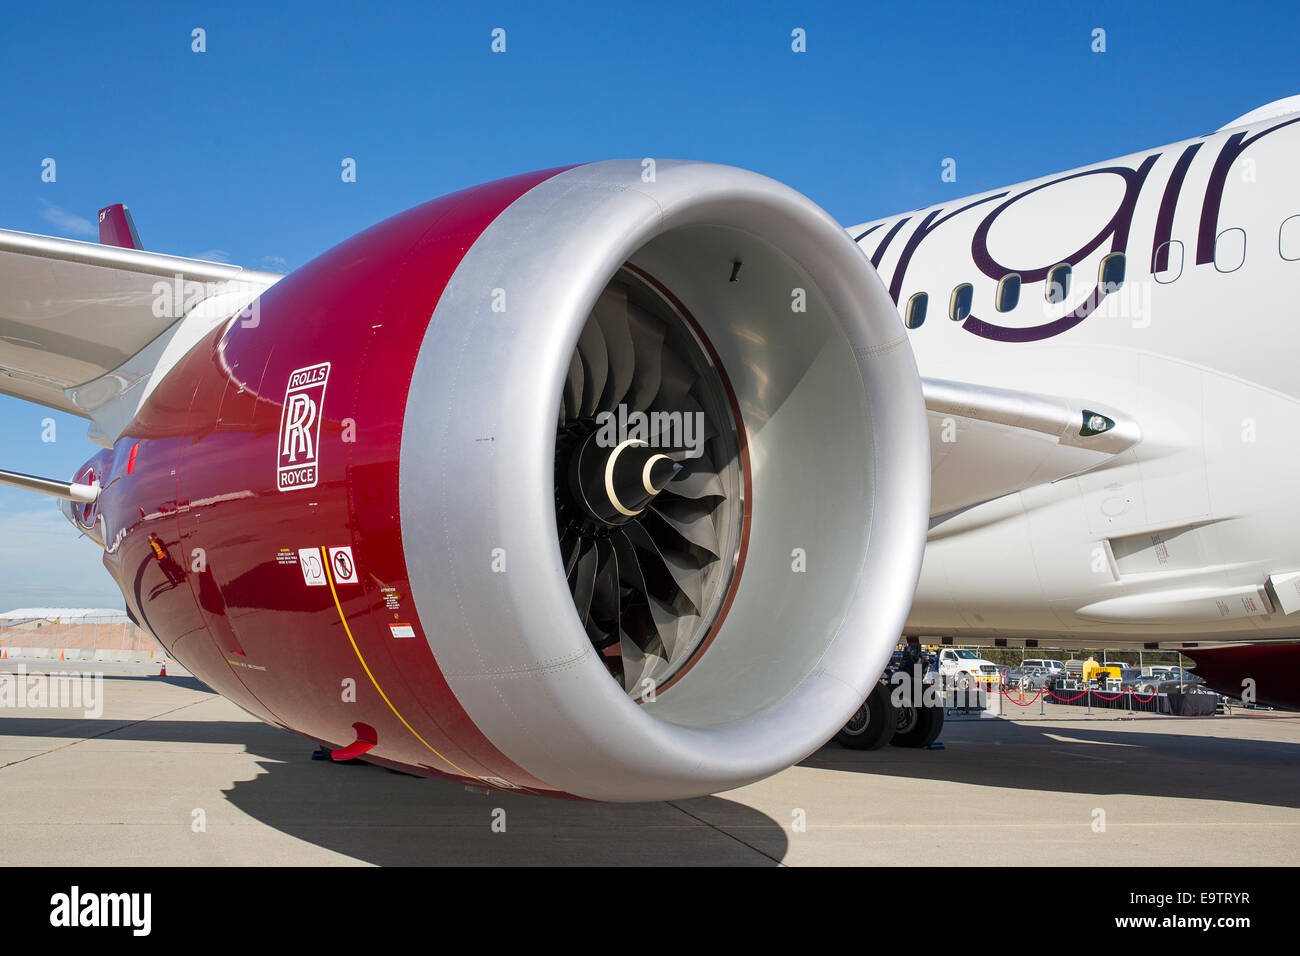 A Rolls Royce Trent 1000 turbofan engine mounted on a new Boeing 787 Dreamliner for Virgin Atlantic. Stock Photo